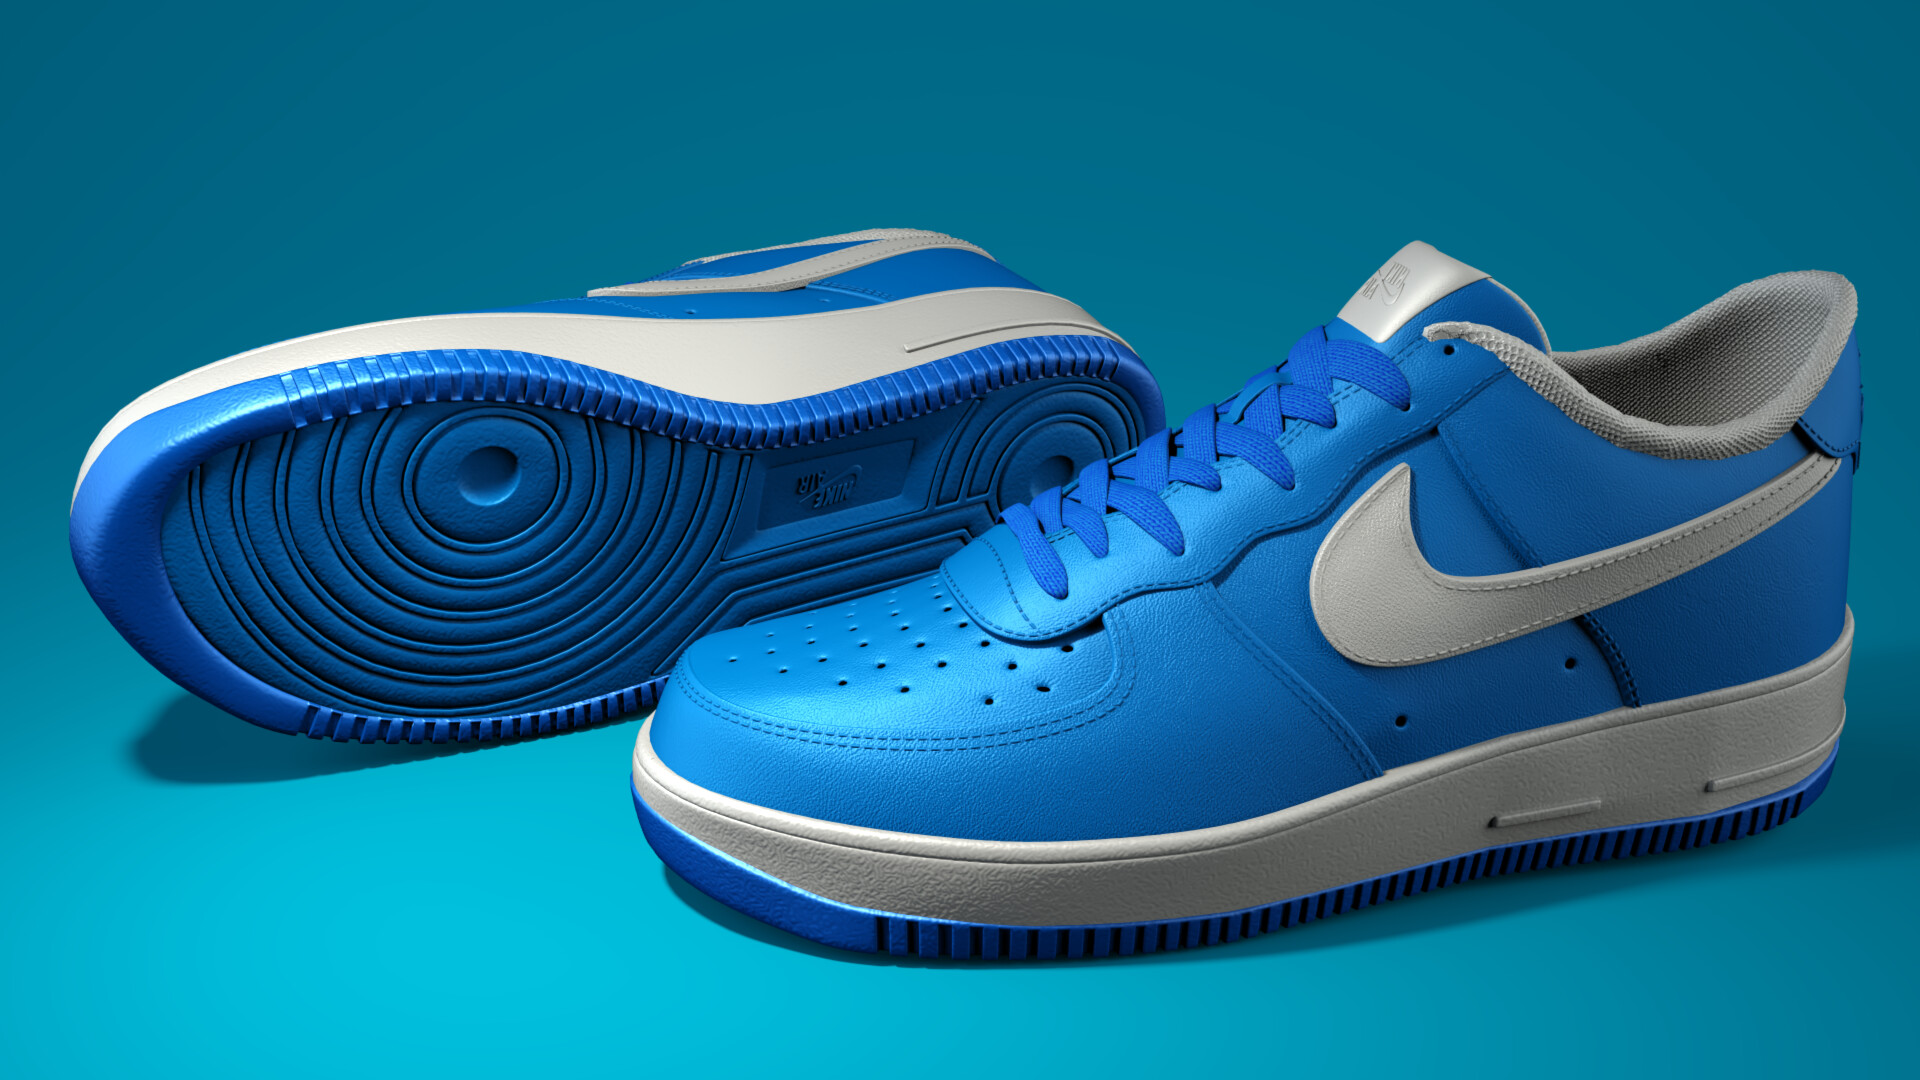 Nike Air Force one Marine blue by TakalakaSNK on DeviantArt